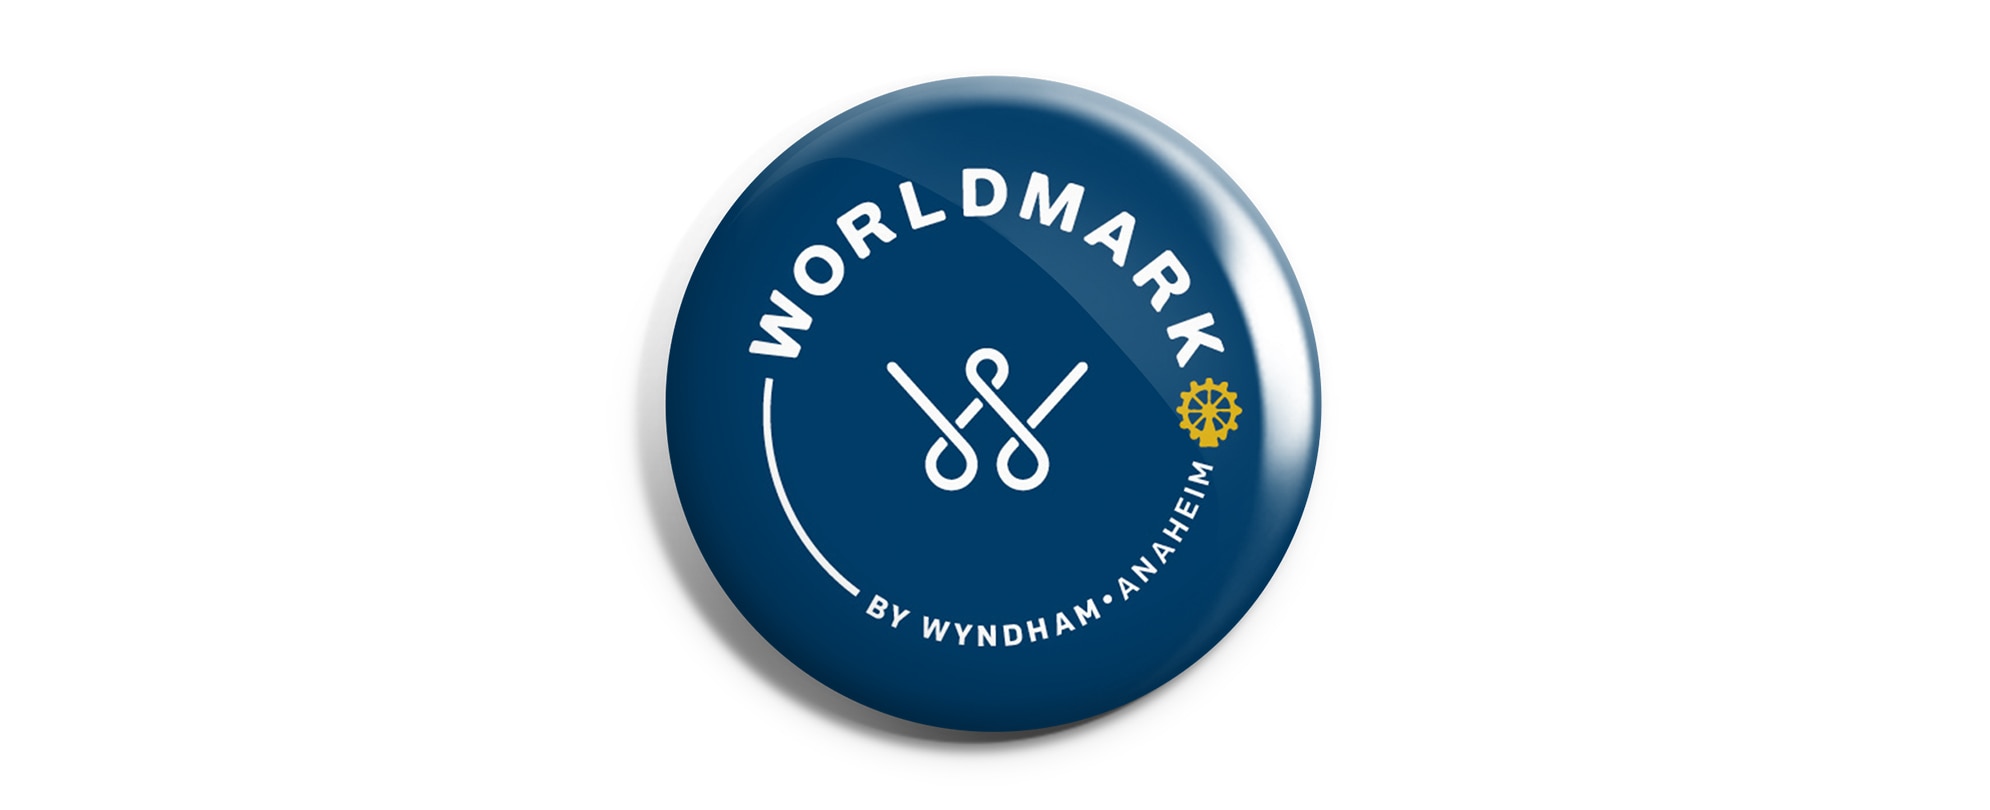 A WorldMark by Wyndham Pinspiration Pin